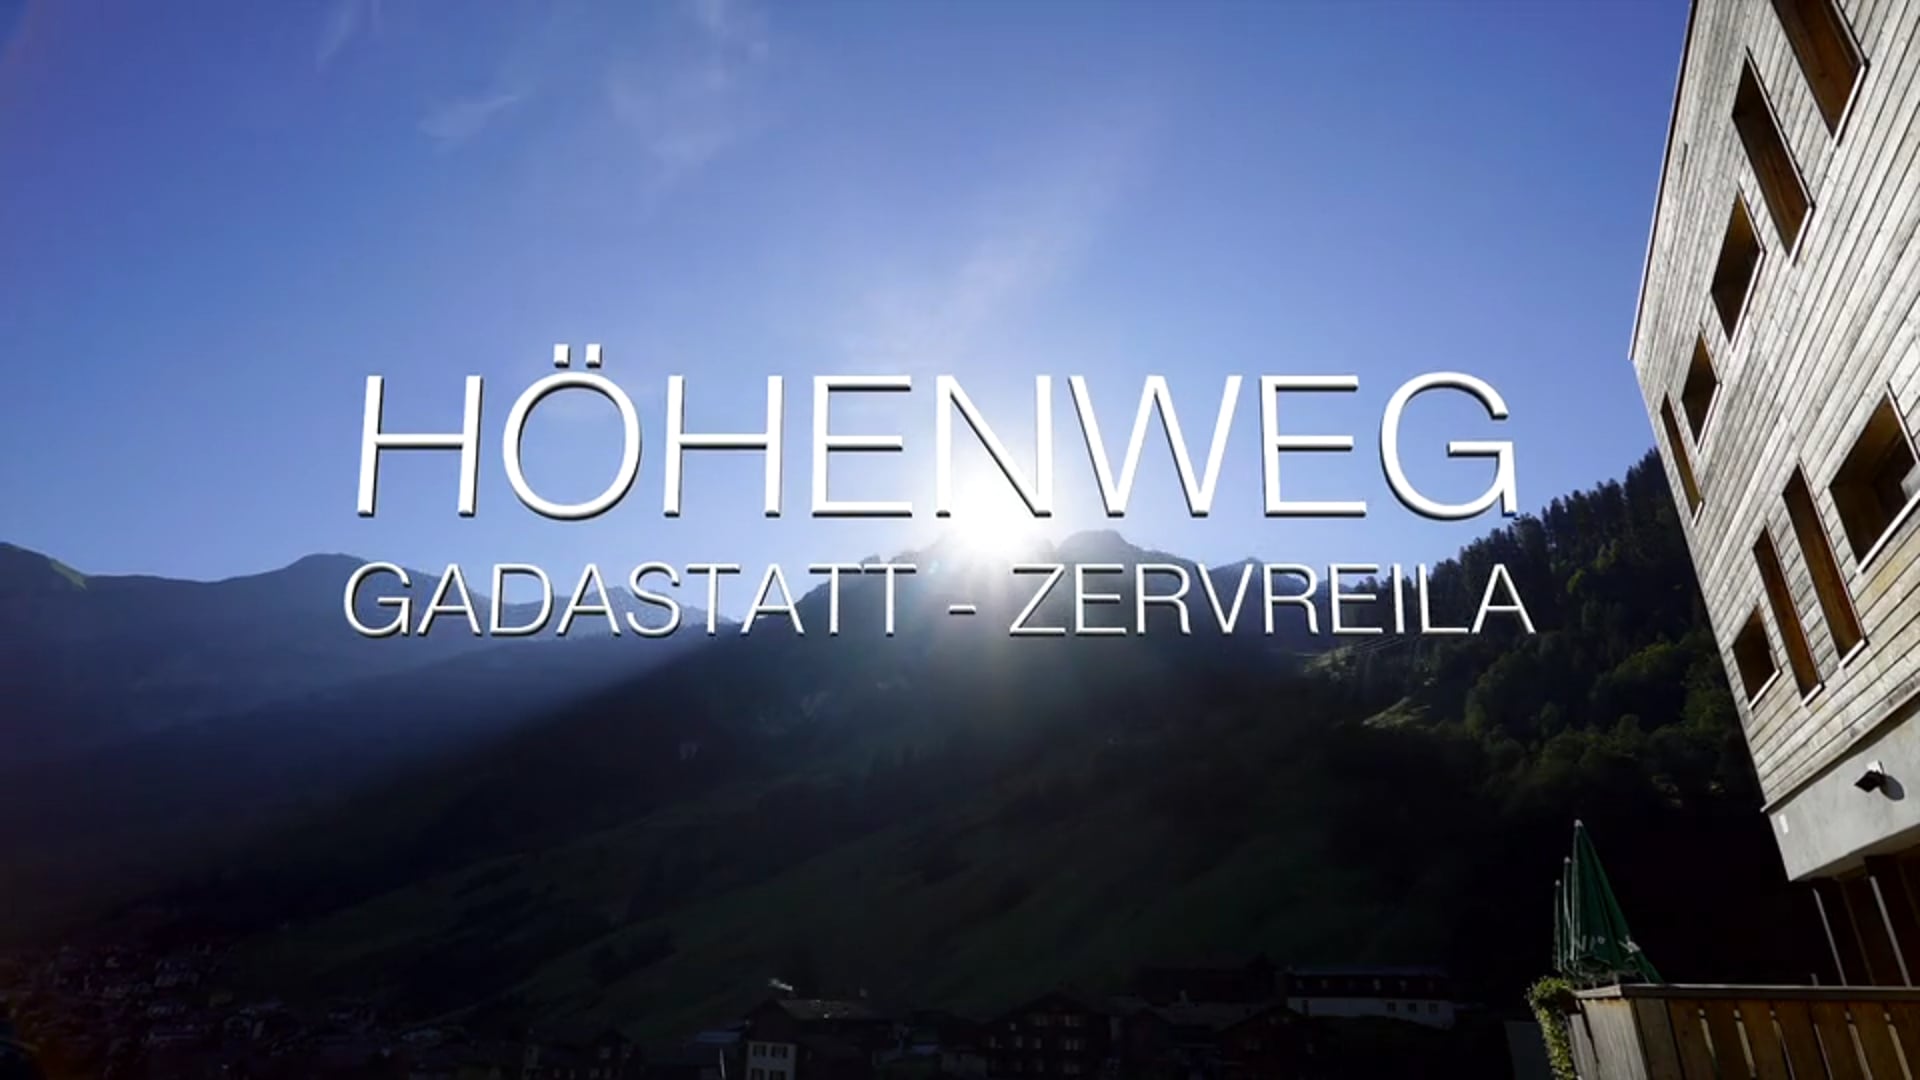 Höhenweg Gadastatt-Zervreila Sommer 2016